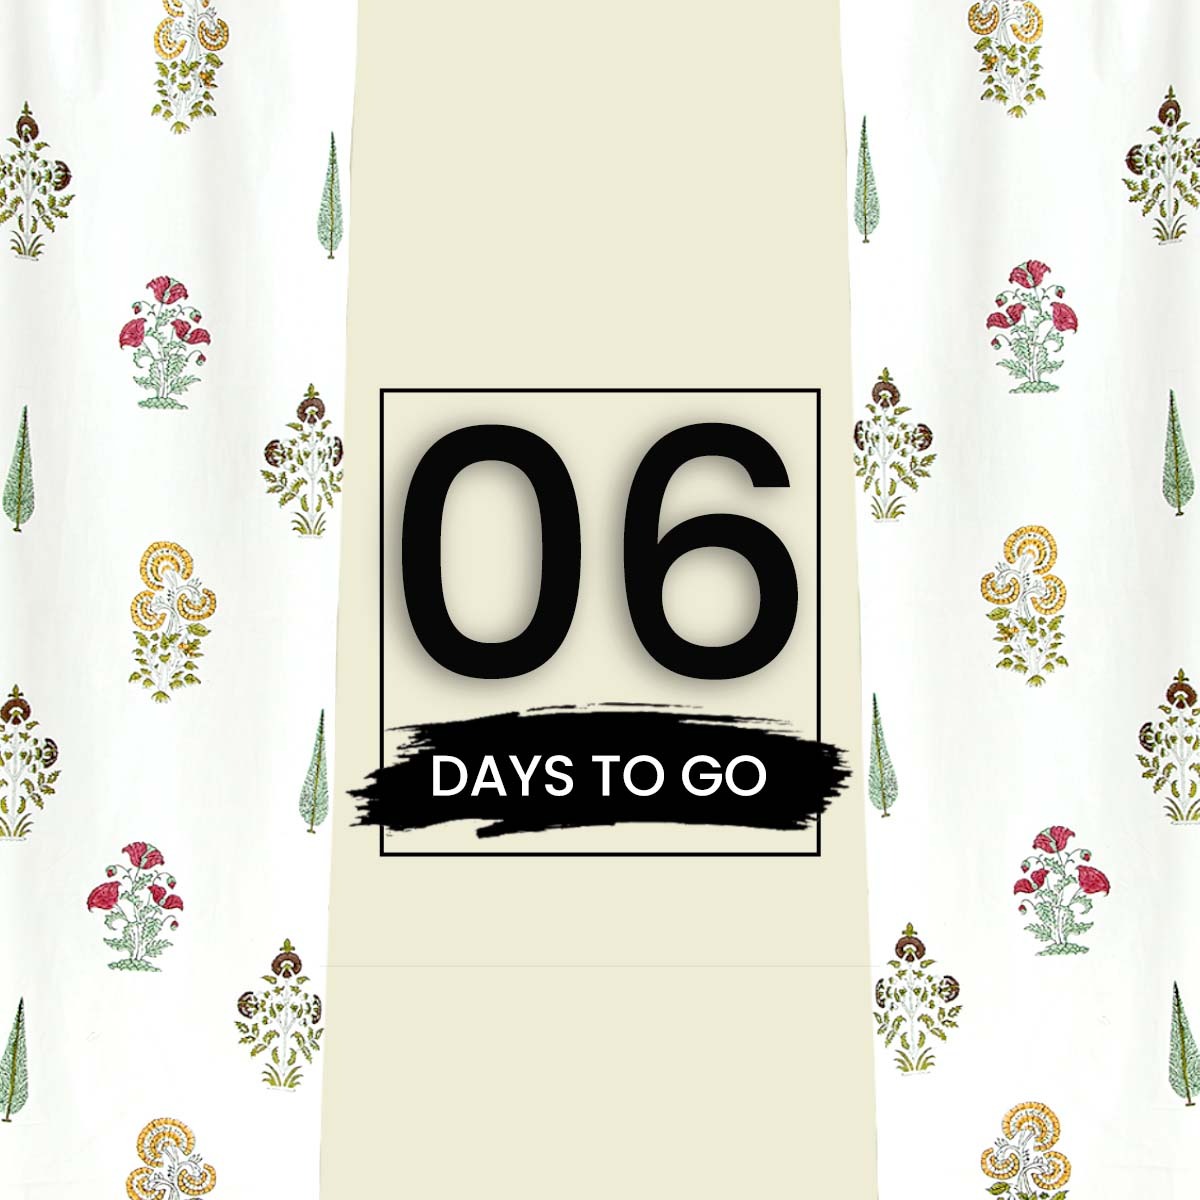 Get Ready to Experience Something #Extraordinary - Only 6 Days to Go
dmaasa.com

#handblockprinting #blockprintedfabric #comingsoon #launchingsoon #6daystogo #handblockprinted #blockprintingart #indianartisans #madeinindia #jaipur